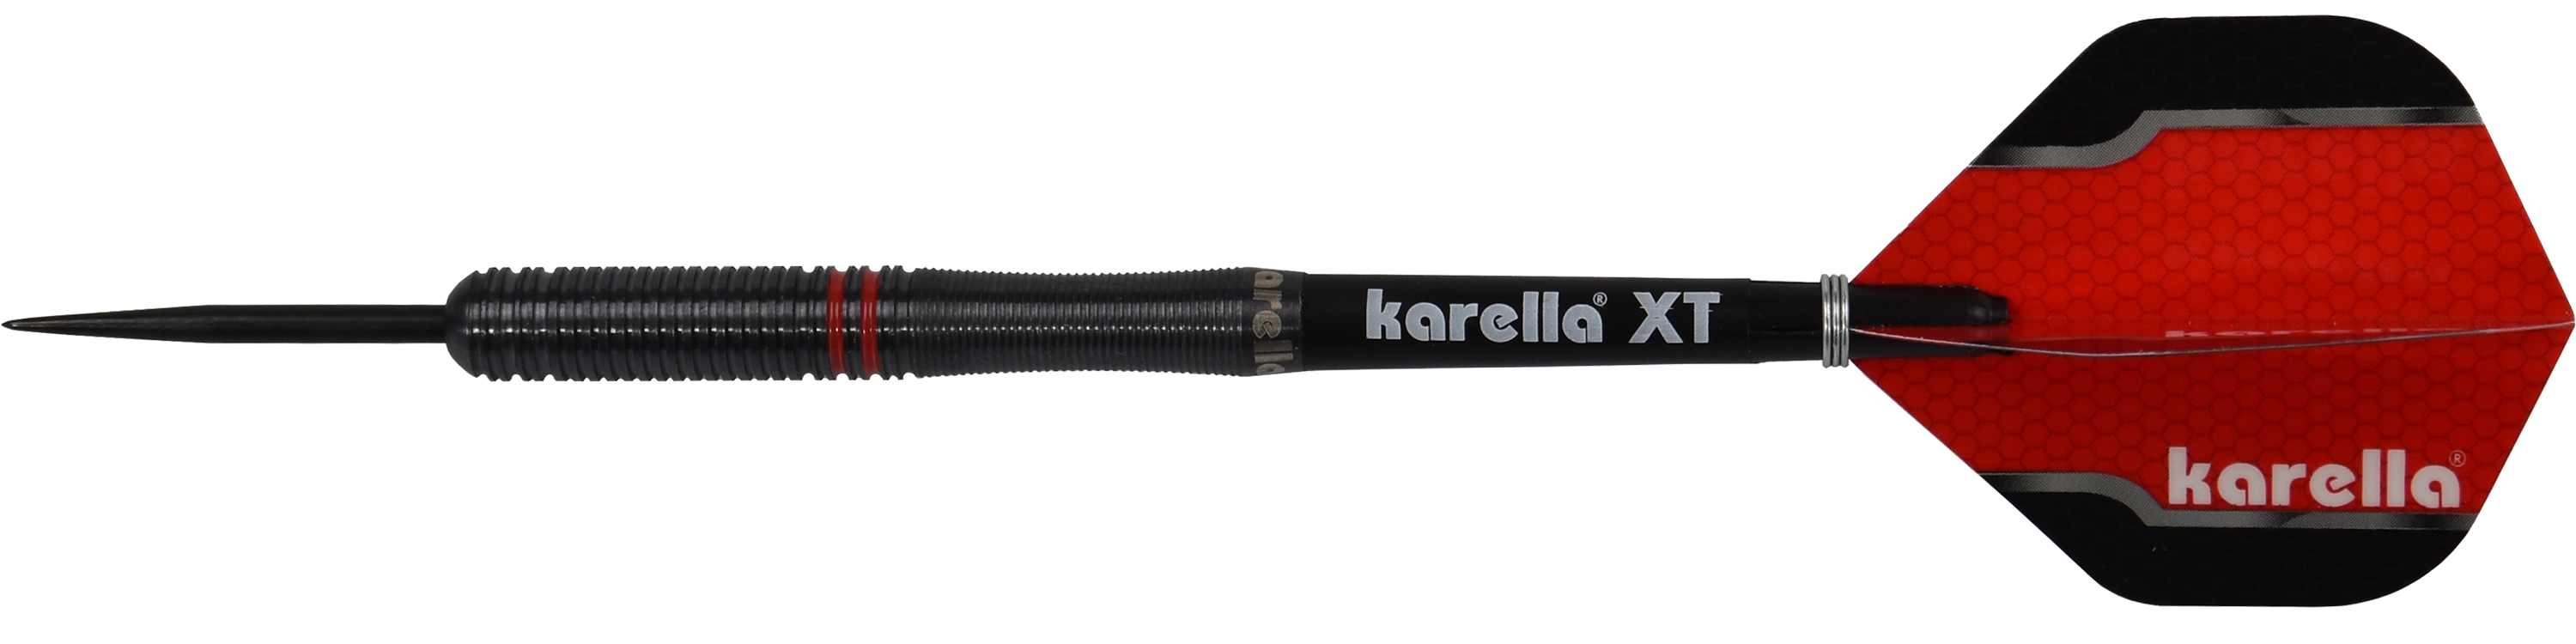 Karella Fighter Steeldarts